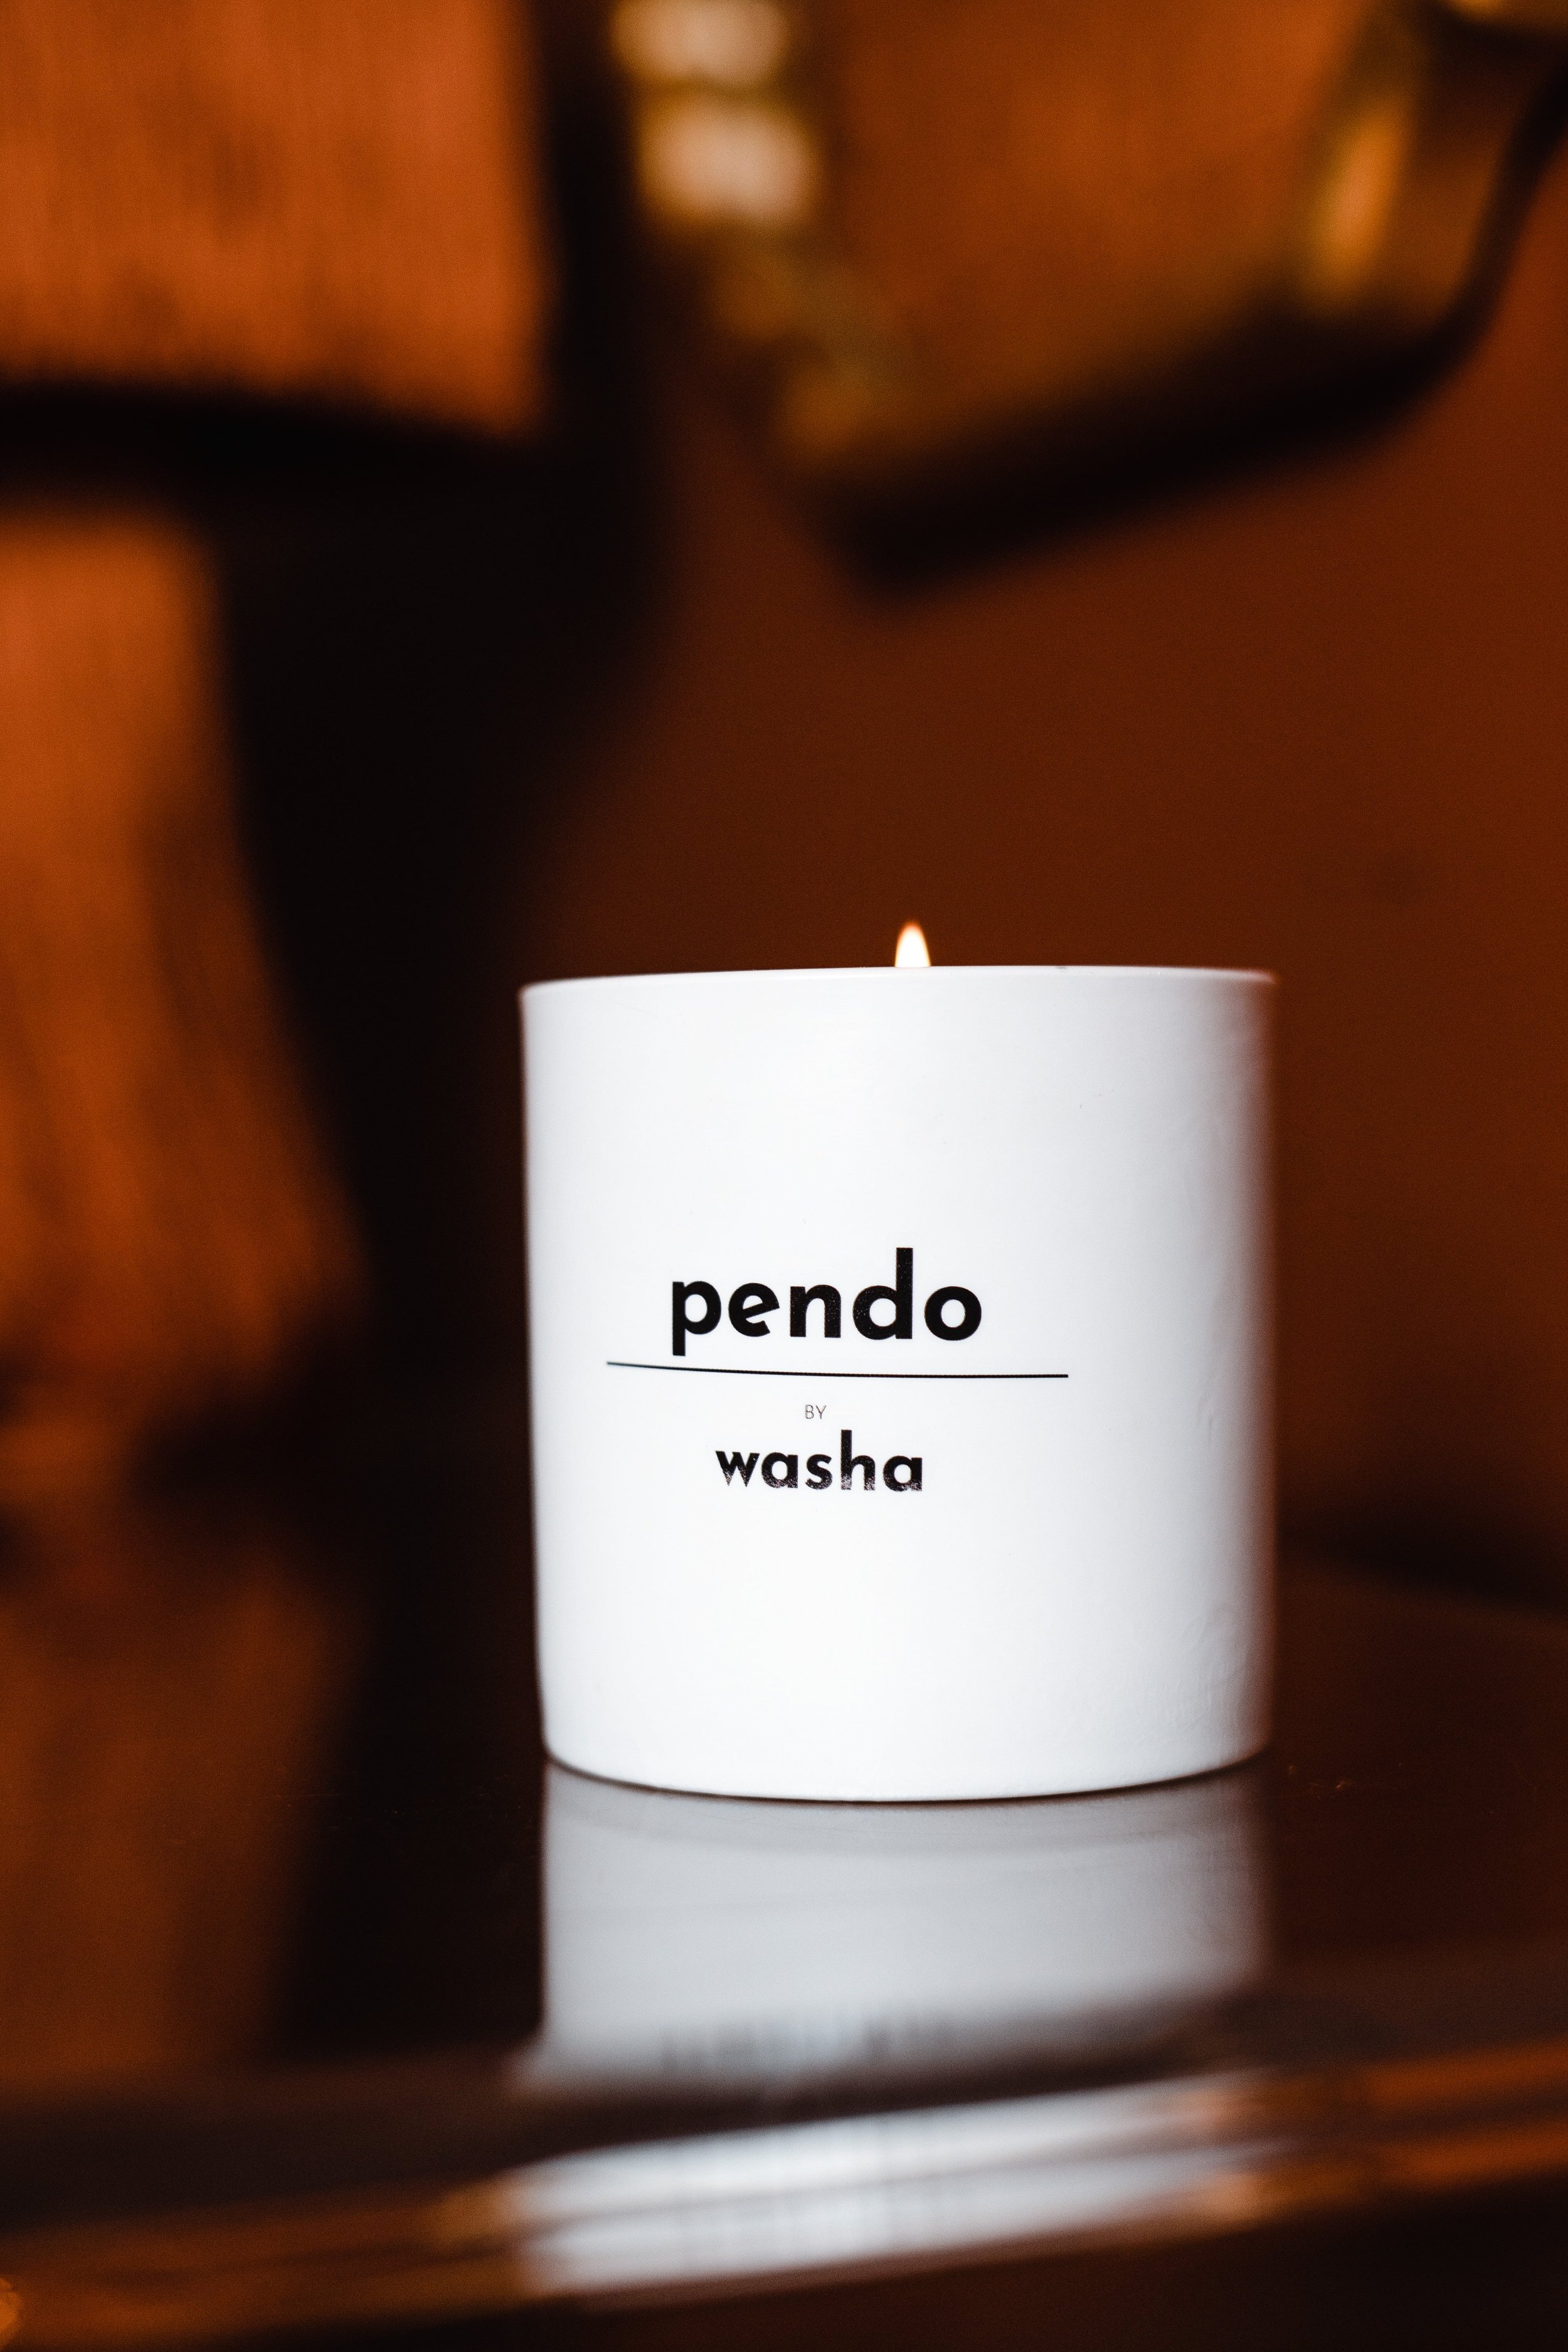 pendo washa candles.JPG